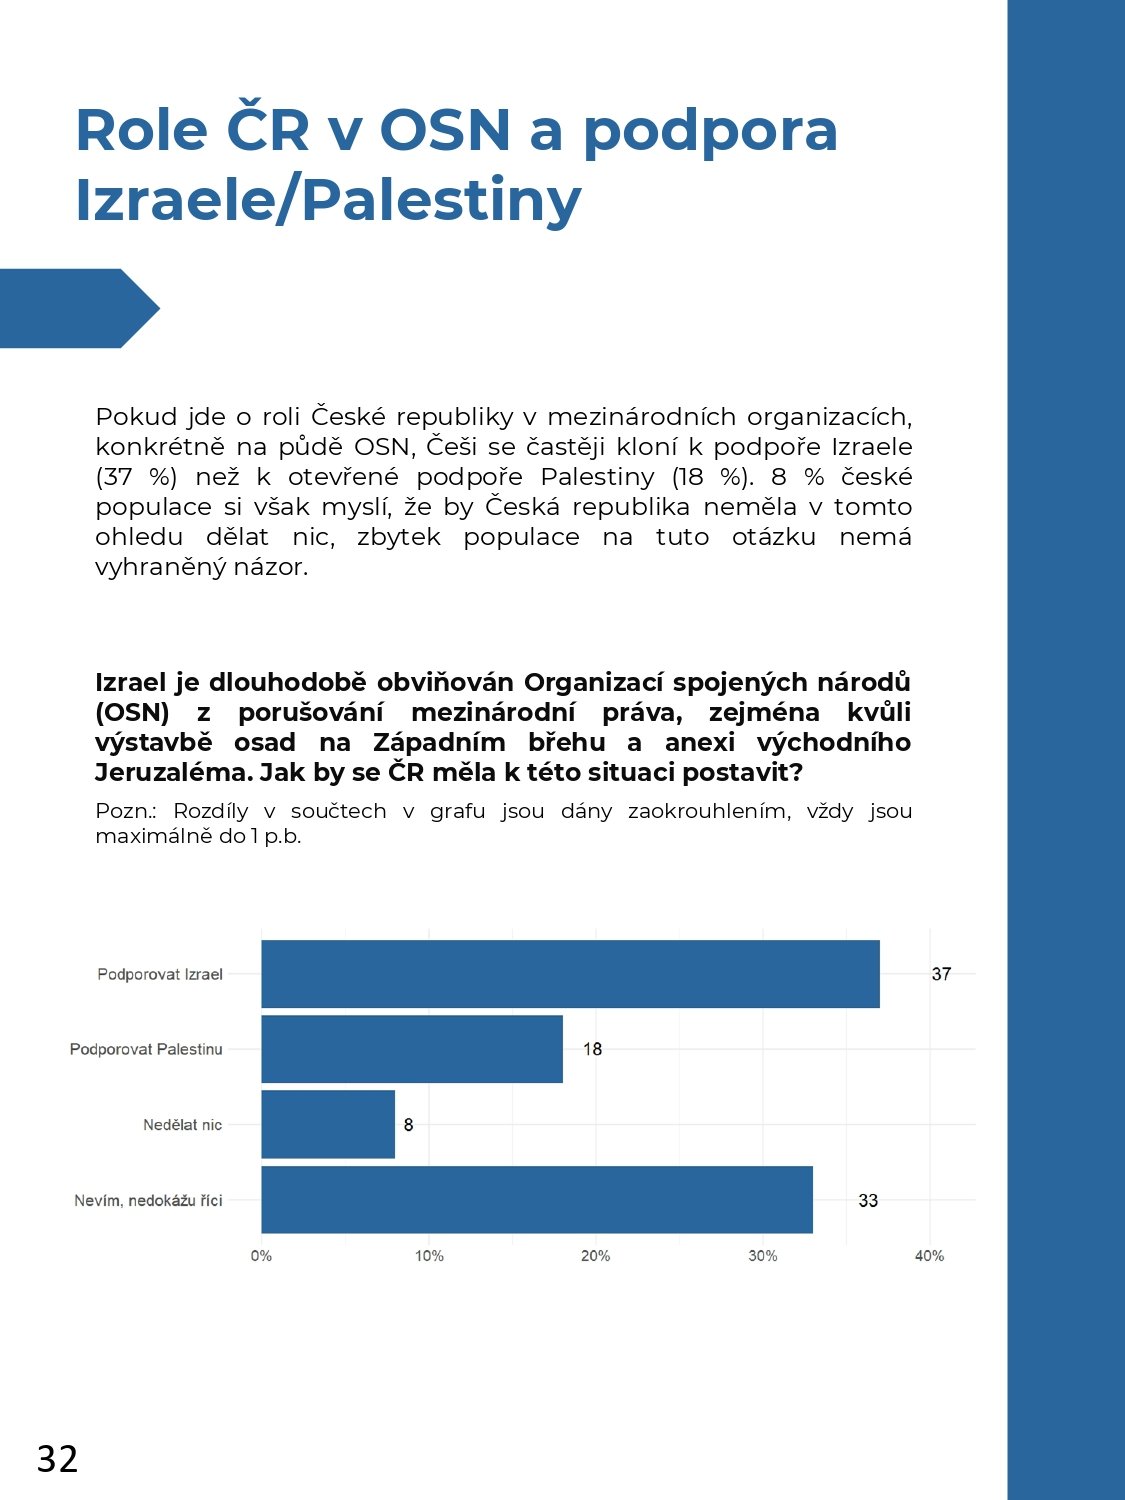 HCIS_PRCP_Public attitudes towards Israel_REPORT_CZ_Finální (2)_pages-to-jpg-0032.jpg